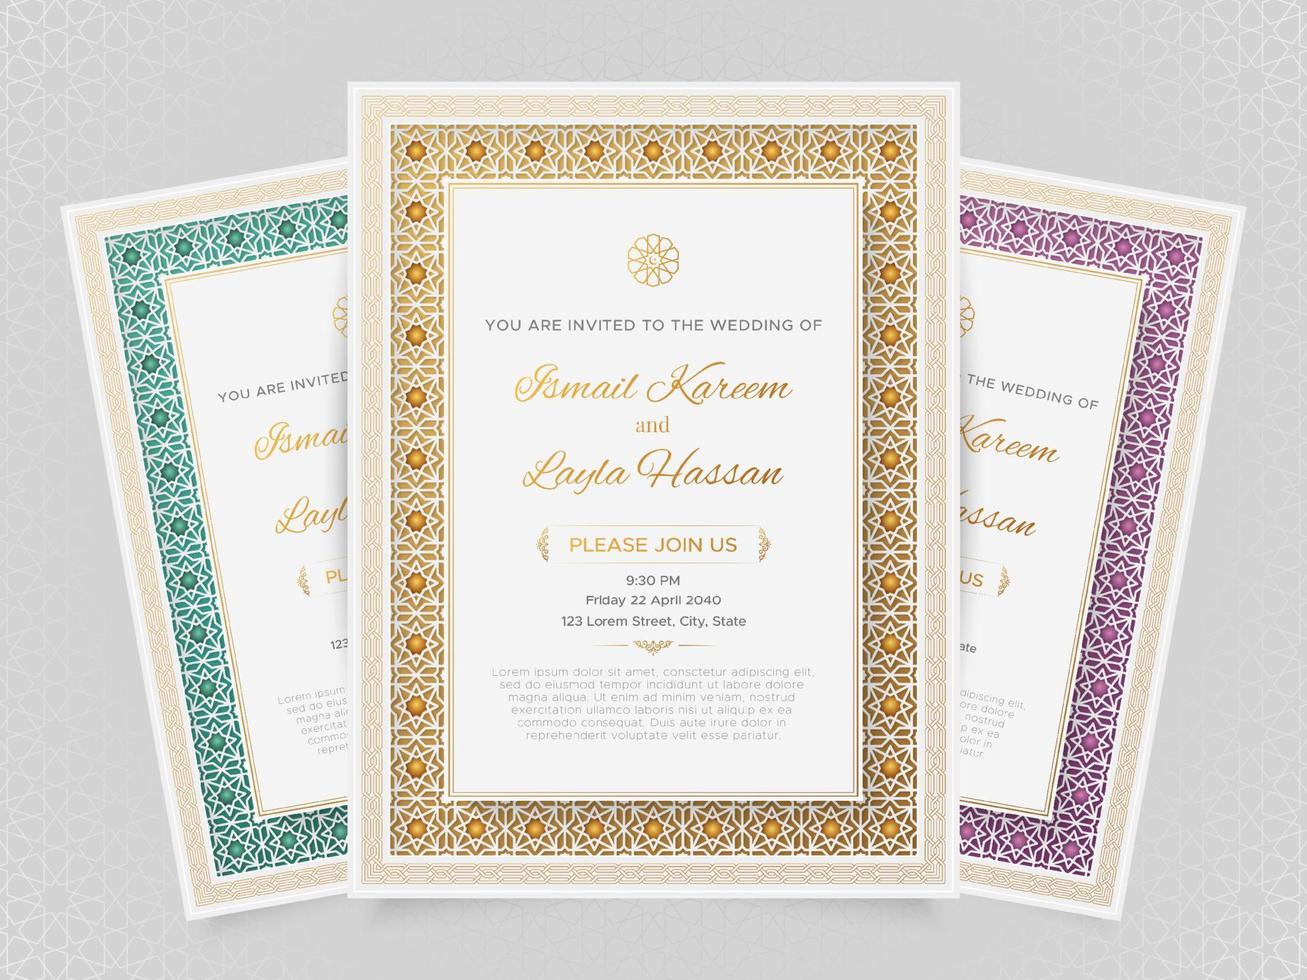 Arabic-style wedding invitation card design with Islamic colorful border vector